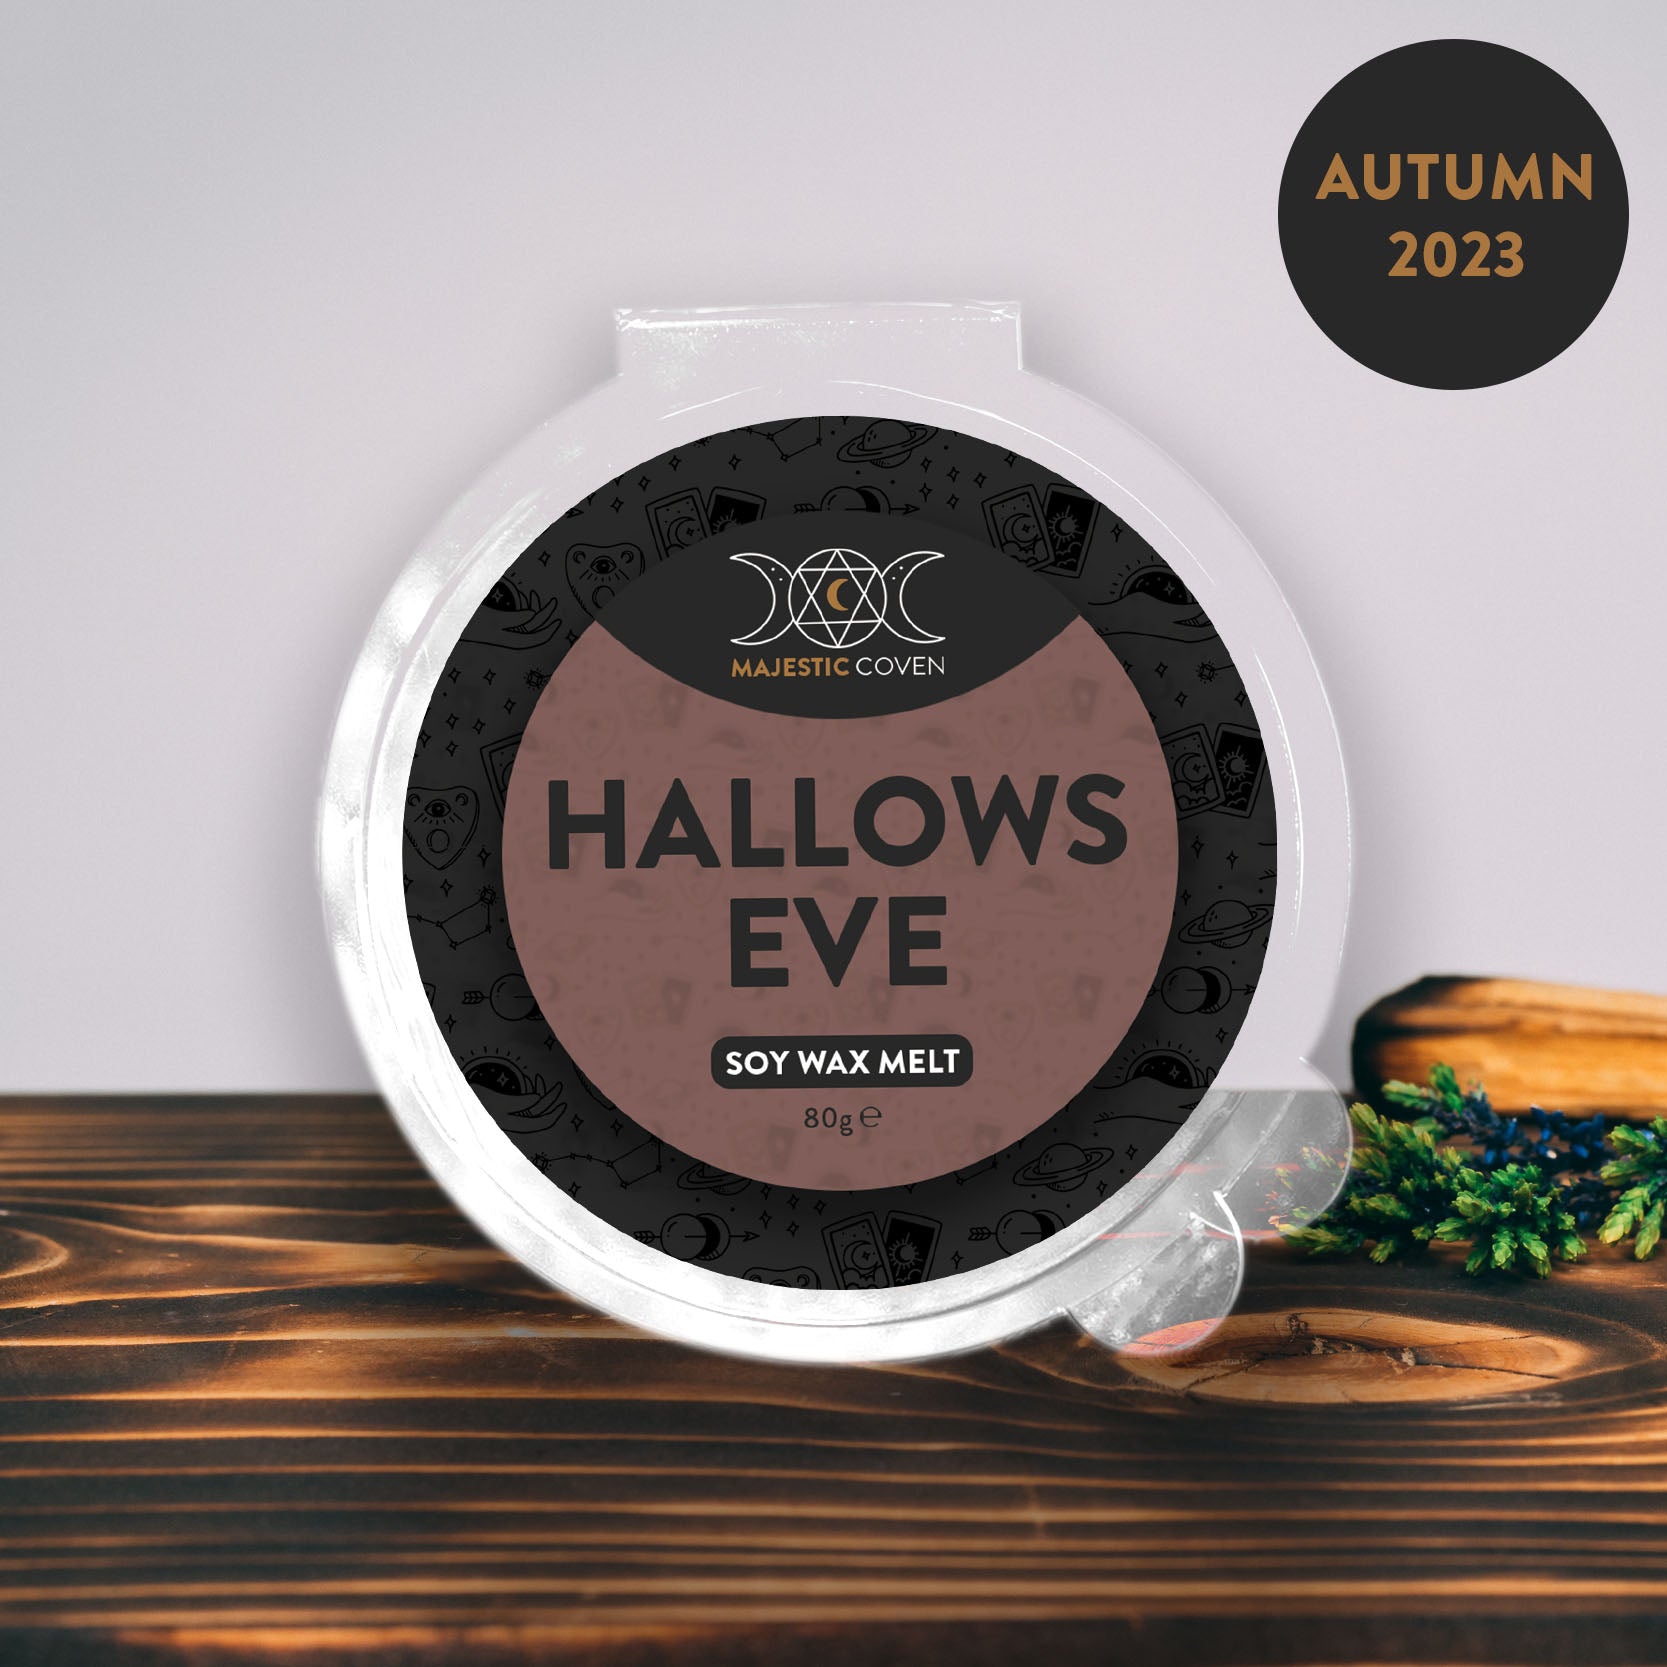 Hallows Eve - Soy Wax Melt 80g Segment Pot Majestic Coven